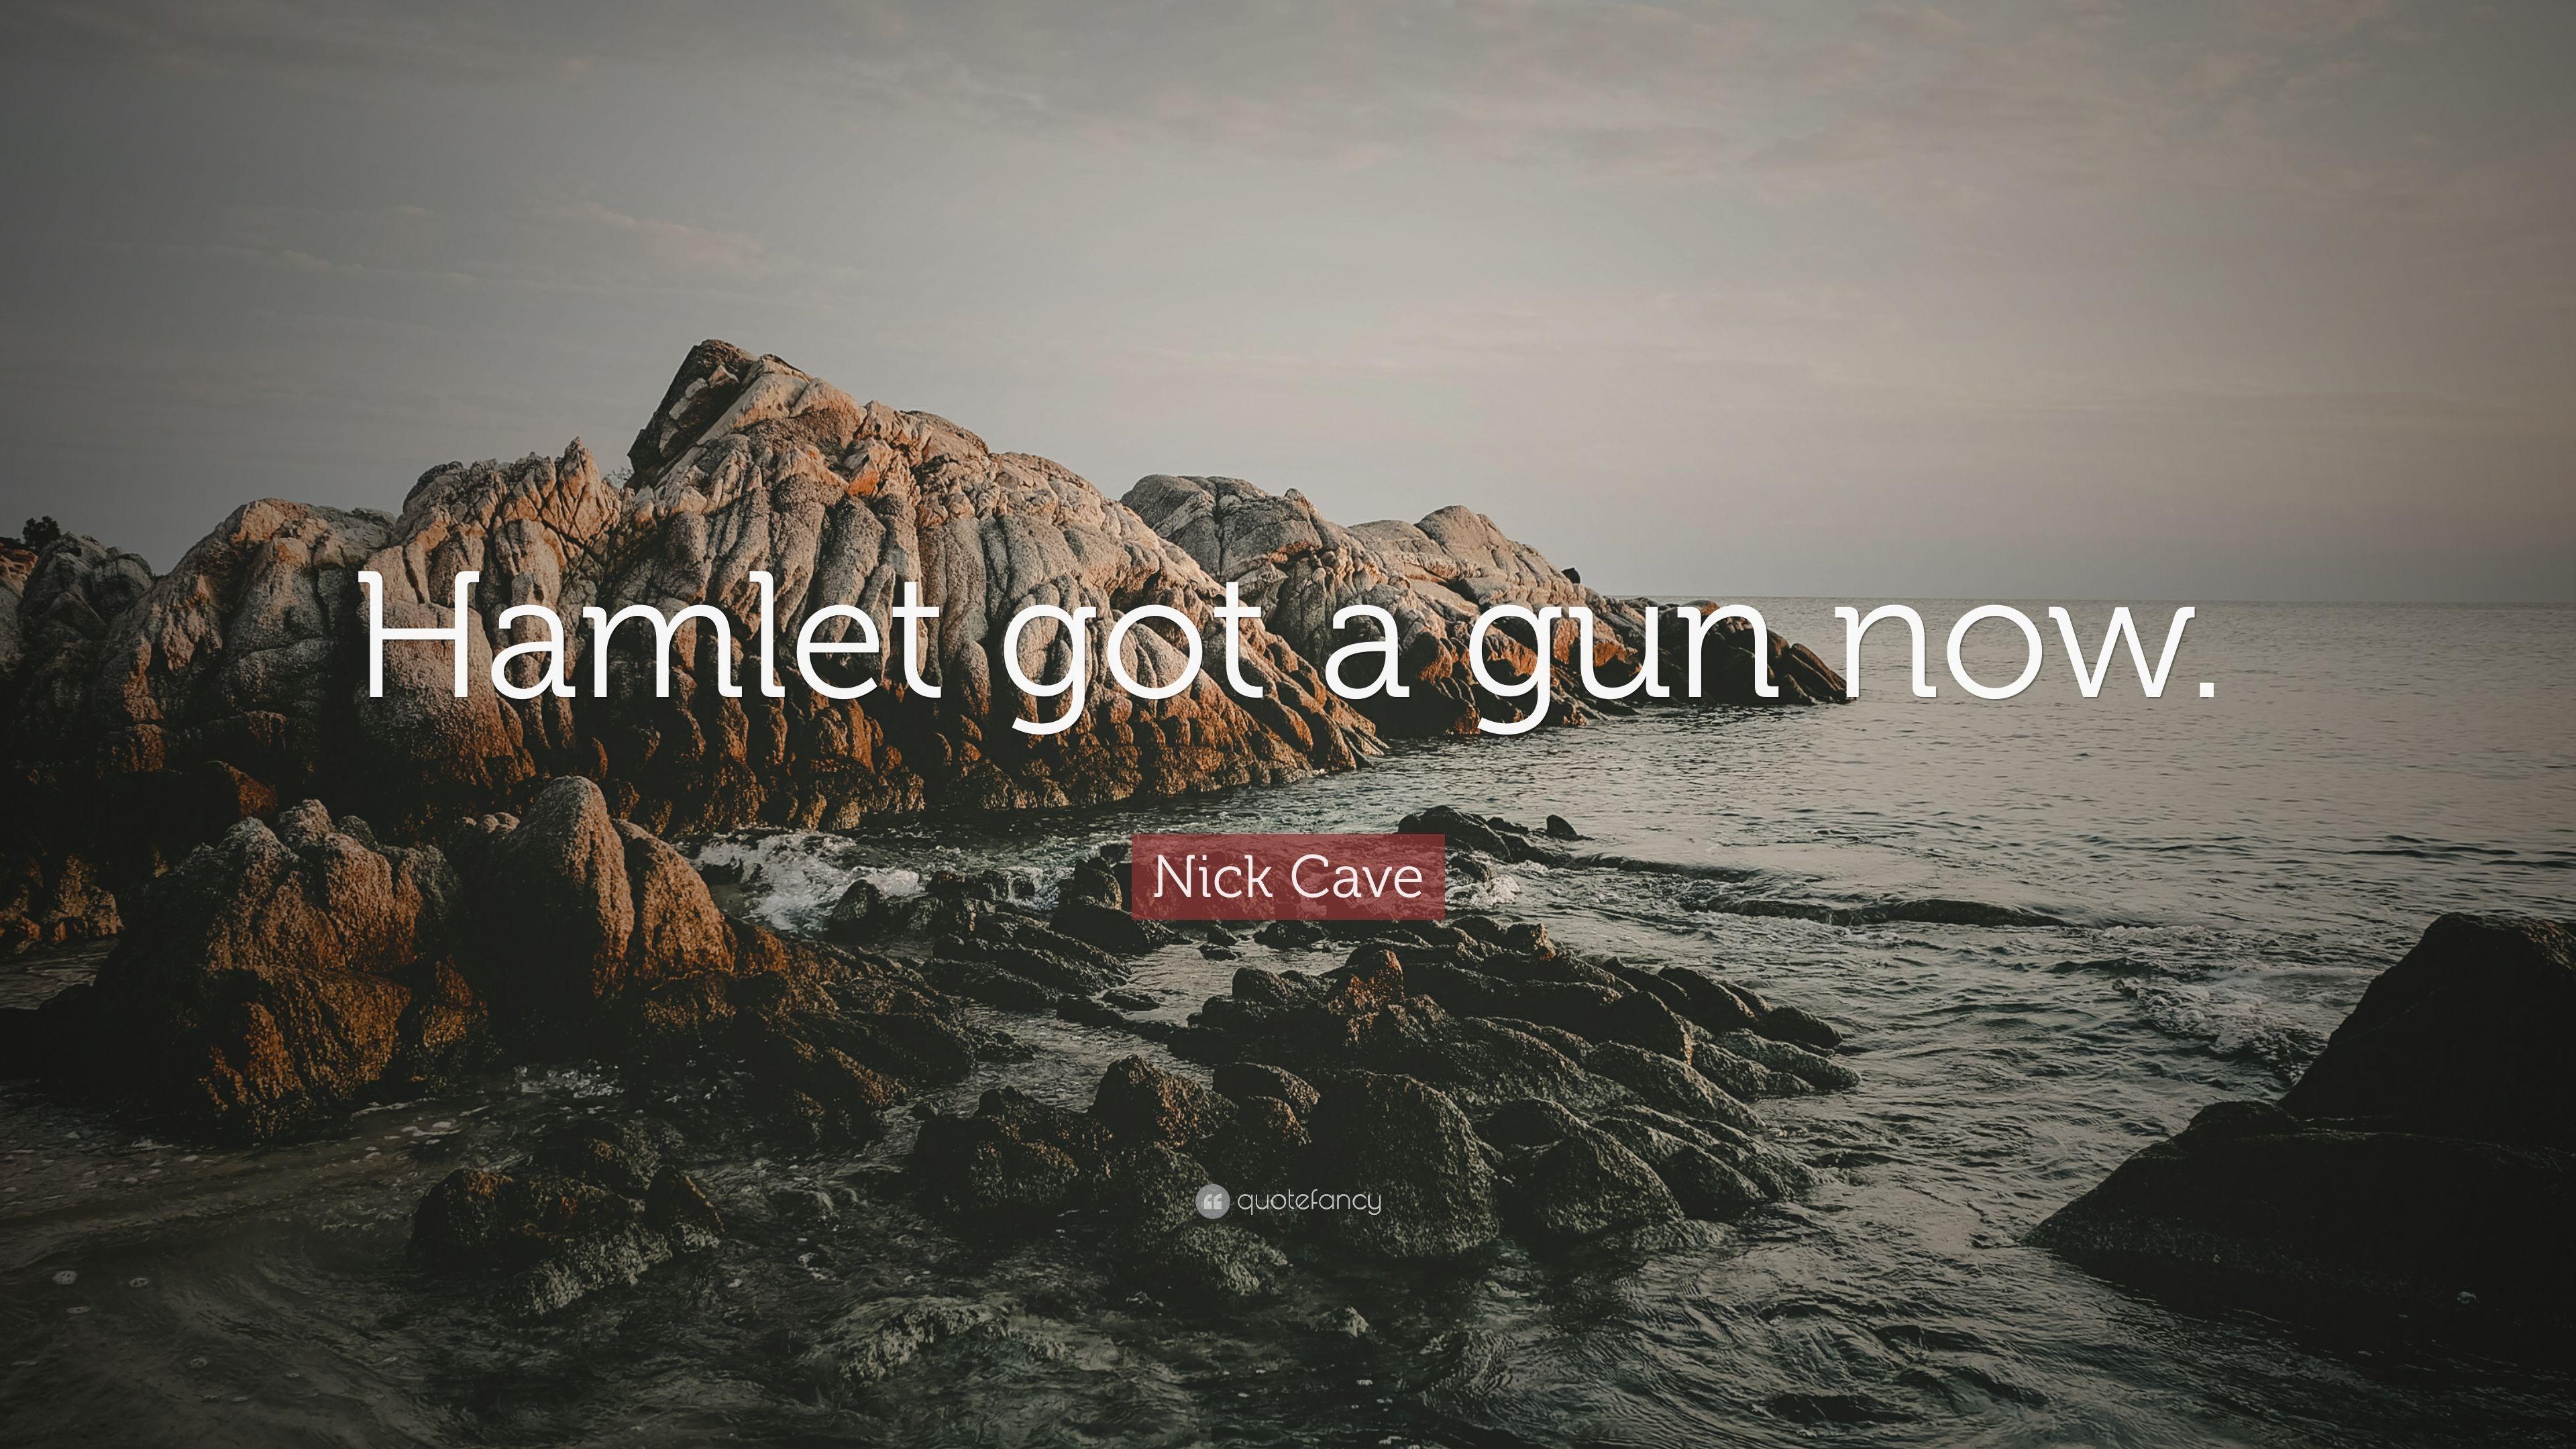 Nick Cave Quote: “Hamlet got a gun now.” (7 wallpaper)